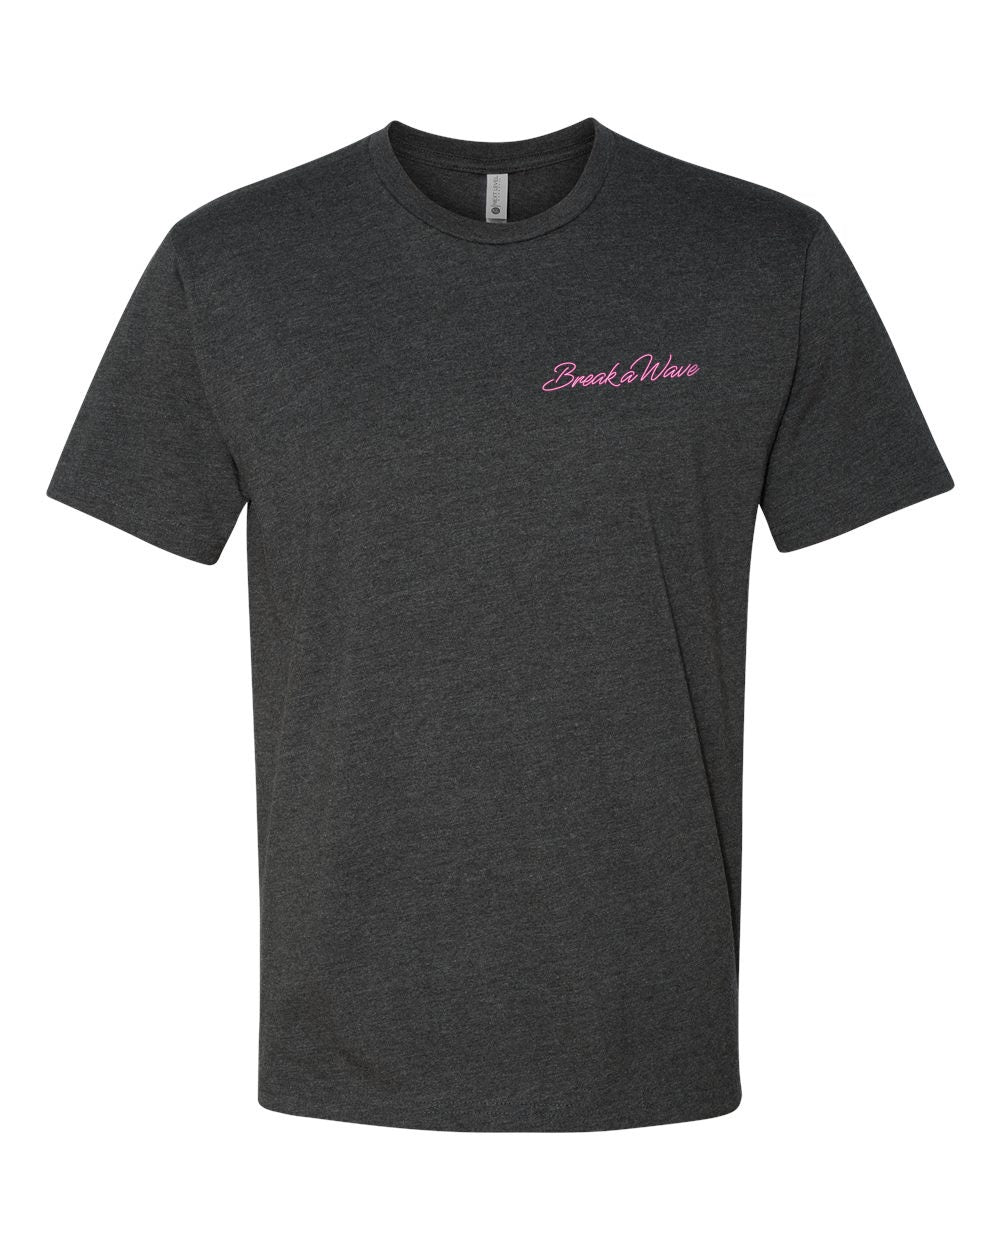 Unisex BreakaWave Short Sleeve T-Shirt **Pre-Sale**